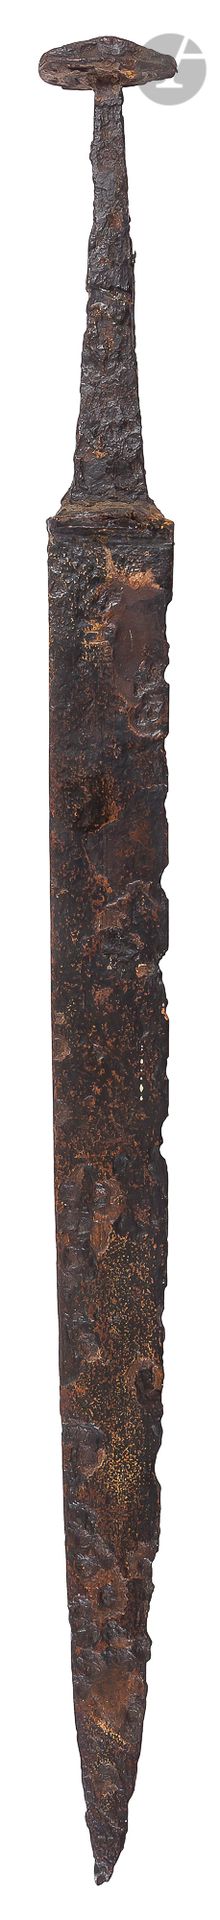 Null 中世纪的短剑。

刀片与背面，一体锻造，套装。小三角鞍座。

梅罗文王朝晚期或卡洛林王朝早期。

挖掘片。长度：51.5厘米

七至八世纪。